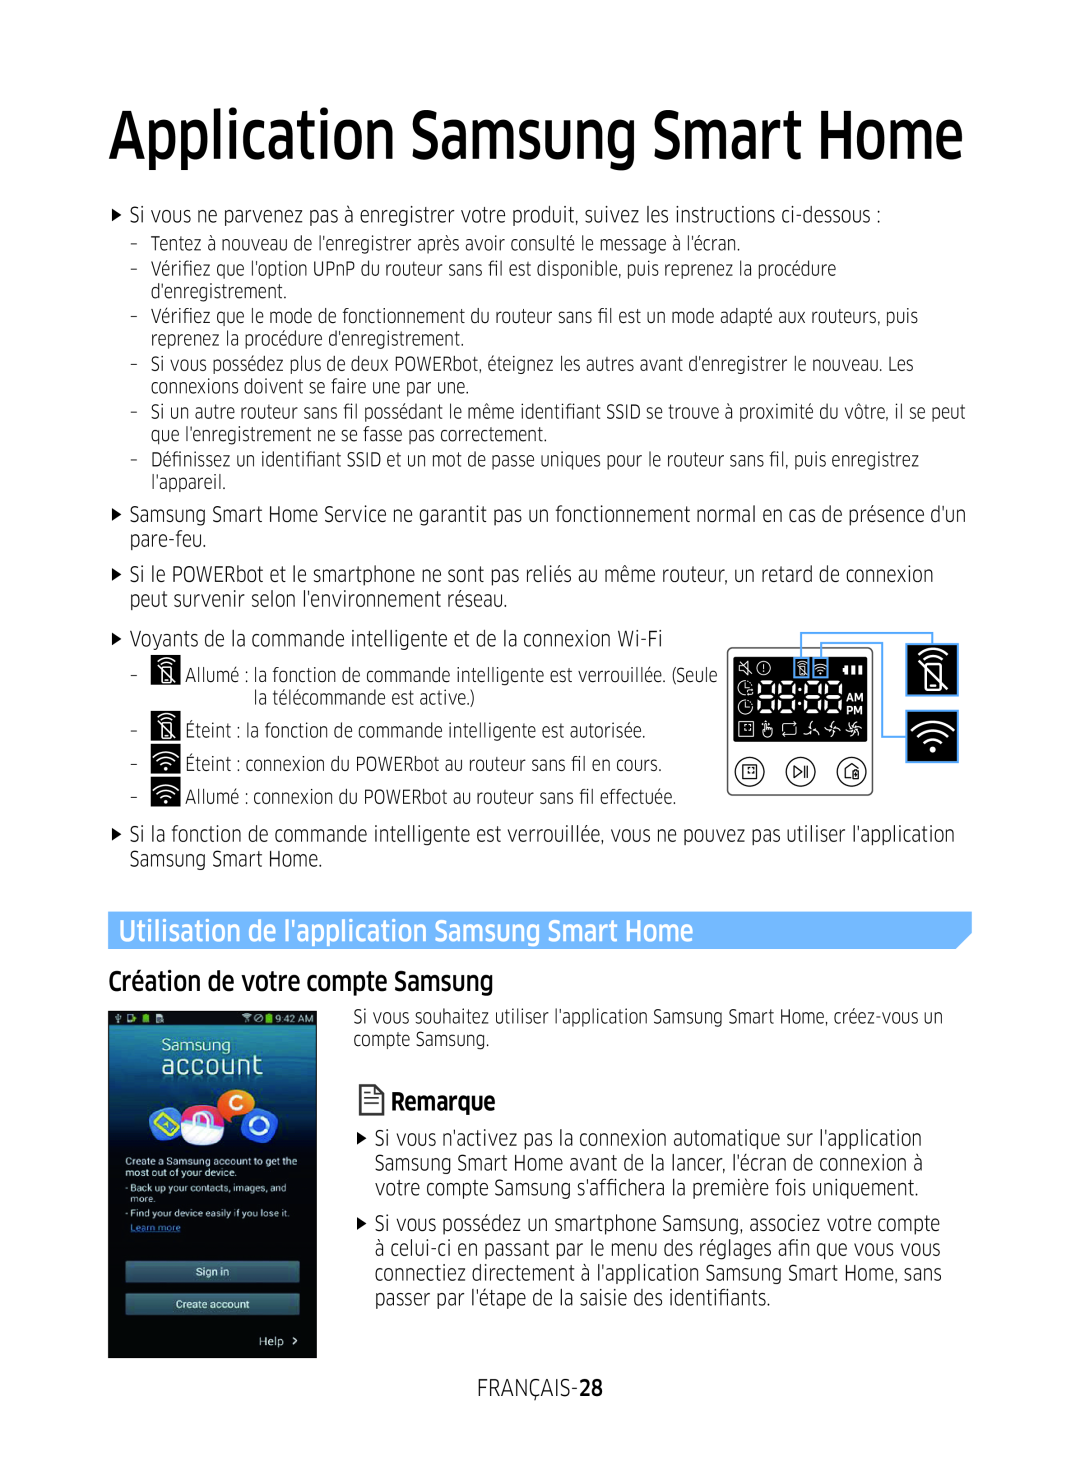 Samsung VR2DM7060WD/EG manual Utilisation de lapplication Samsung Smart Home, Création de votre compte Samsung, Remarque 